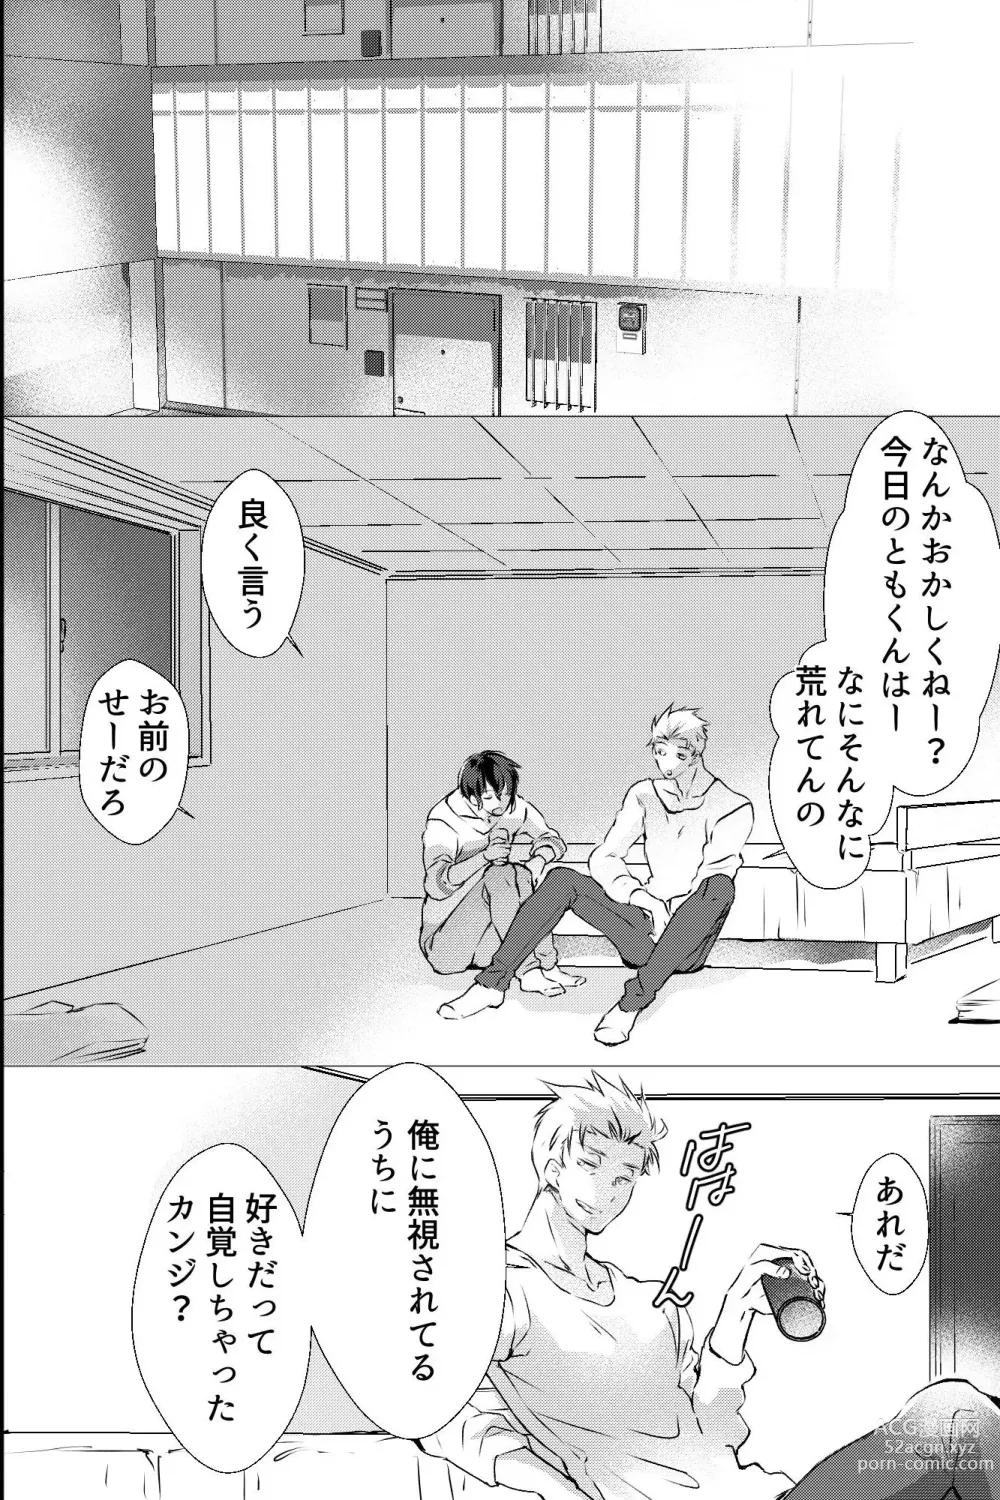 Page 9 of doujinshi 俺しか知らない親友のカオ。媚薬を親友に盛られたら